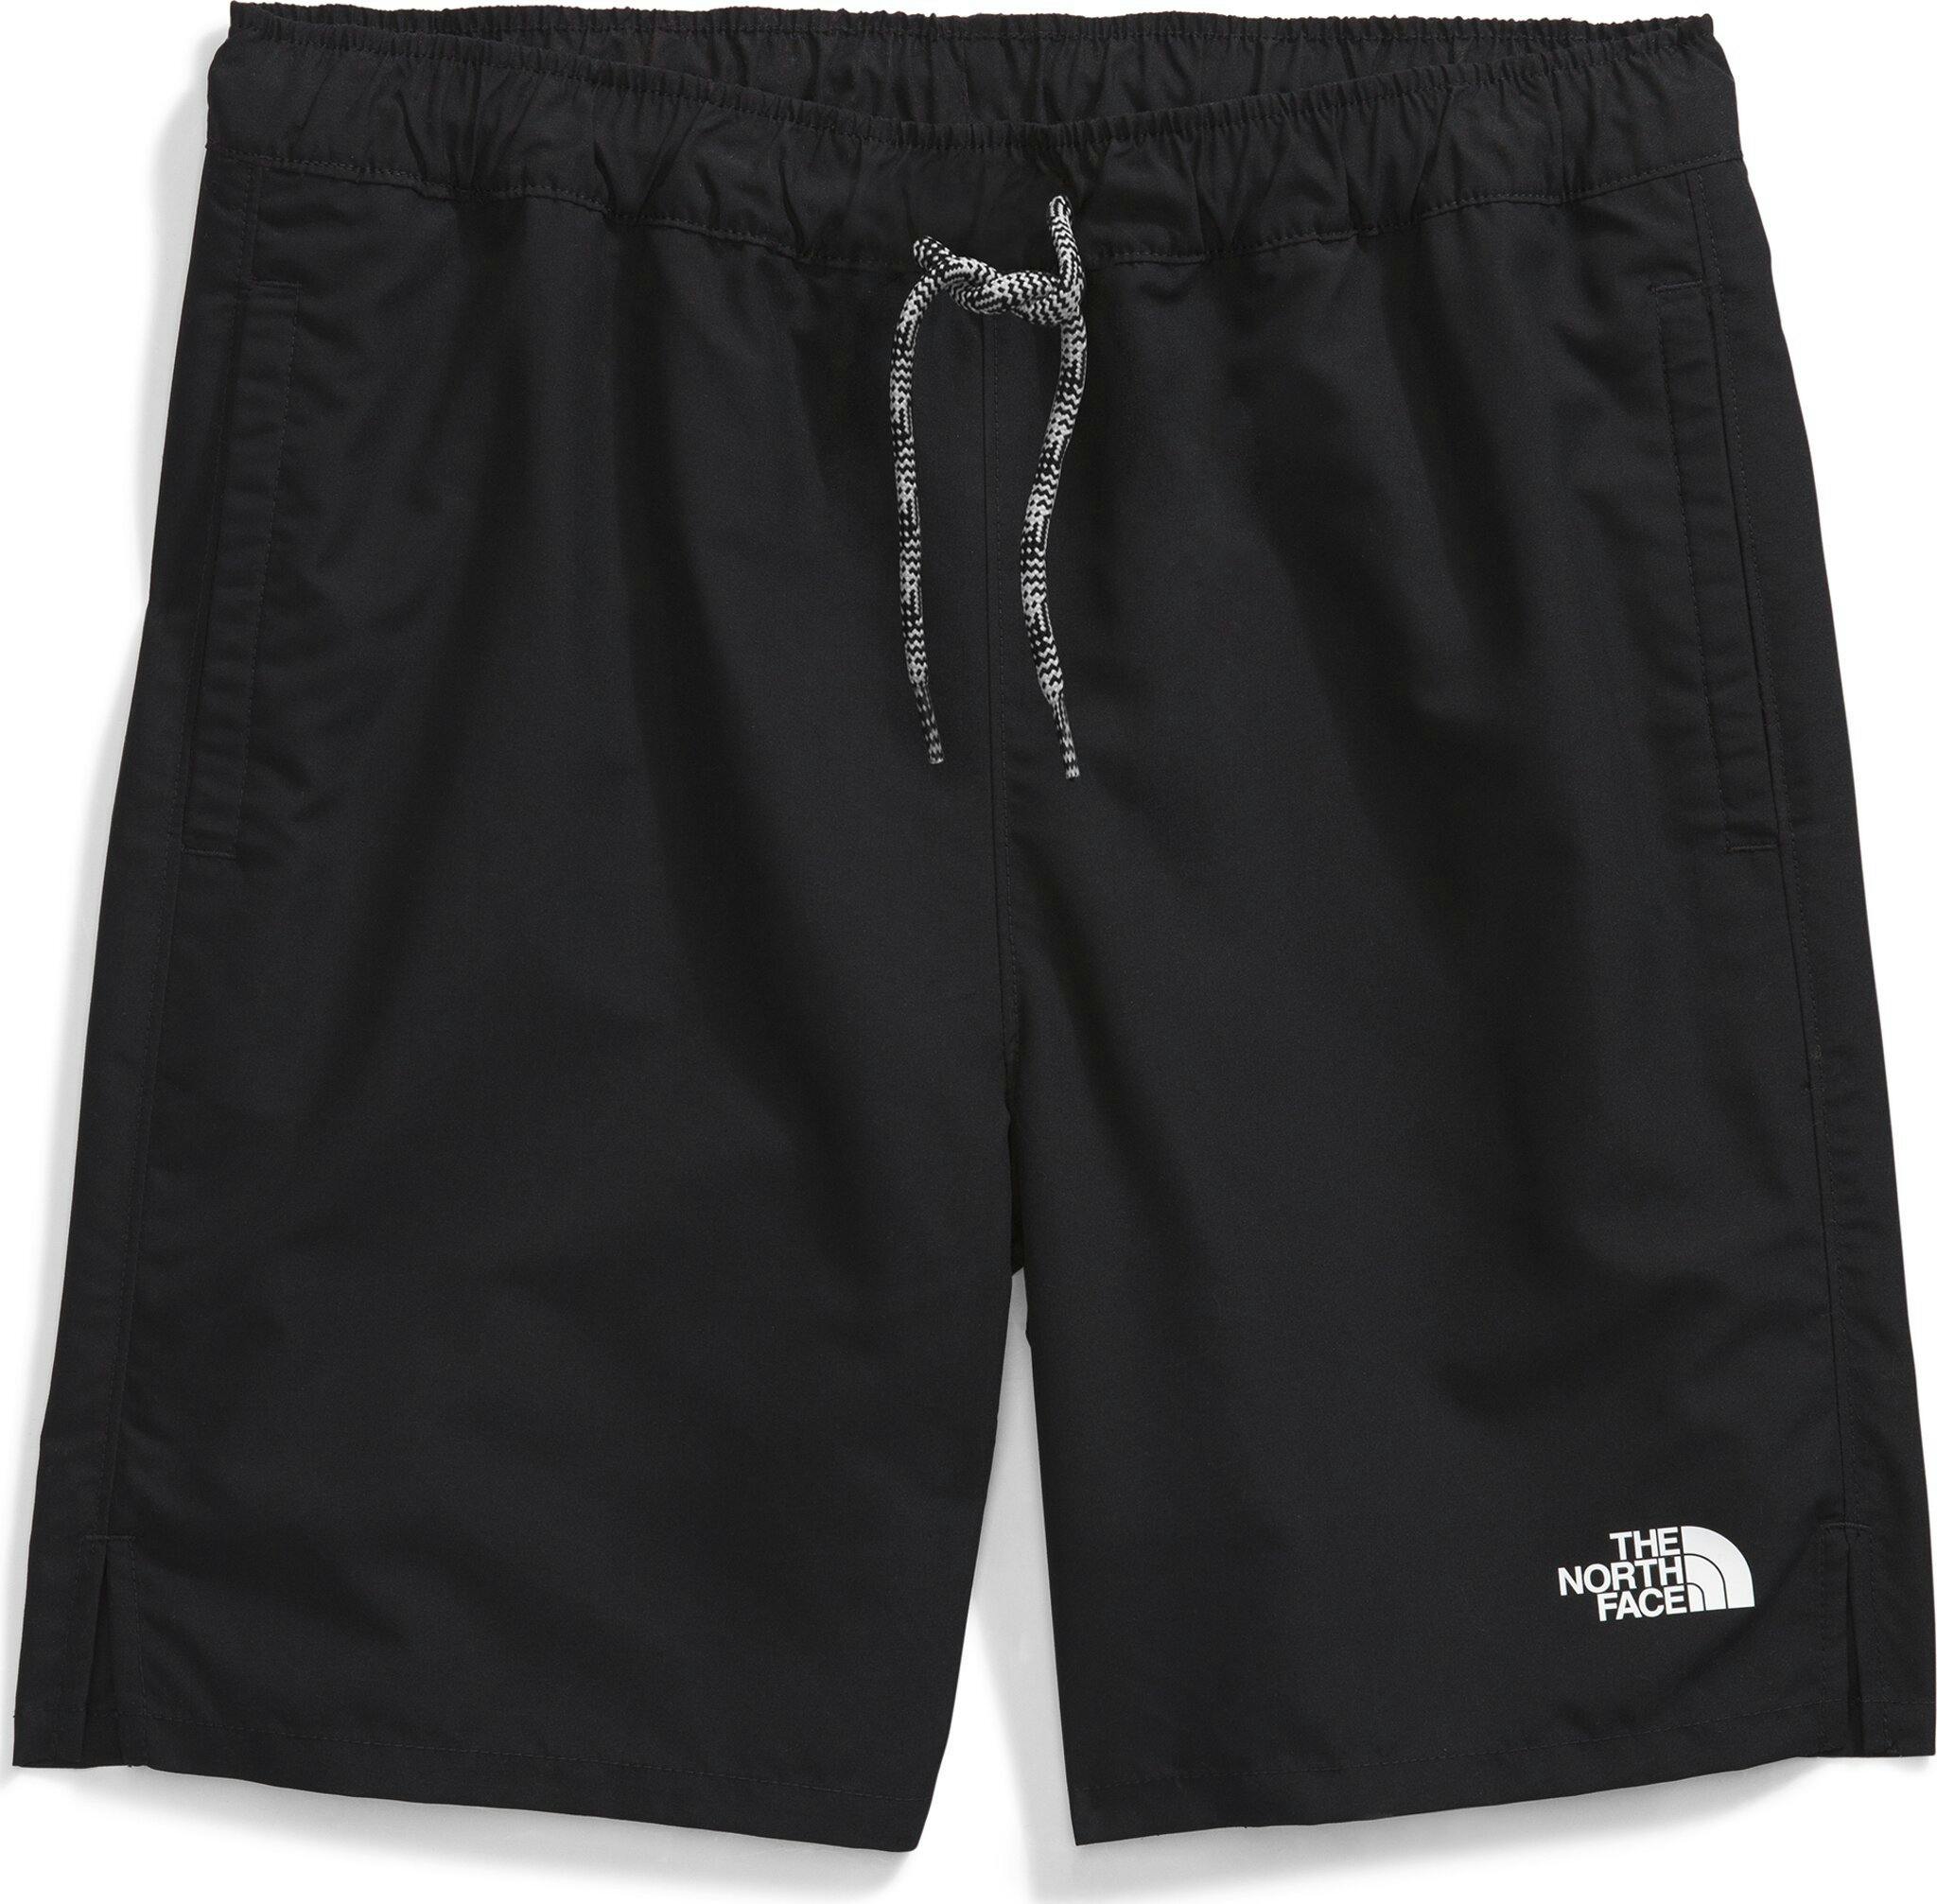 Product image for Amphibious Class V Shorts - Boys